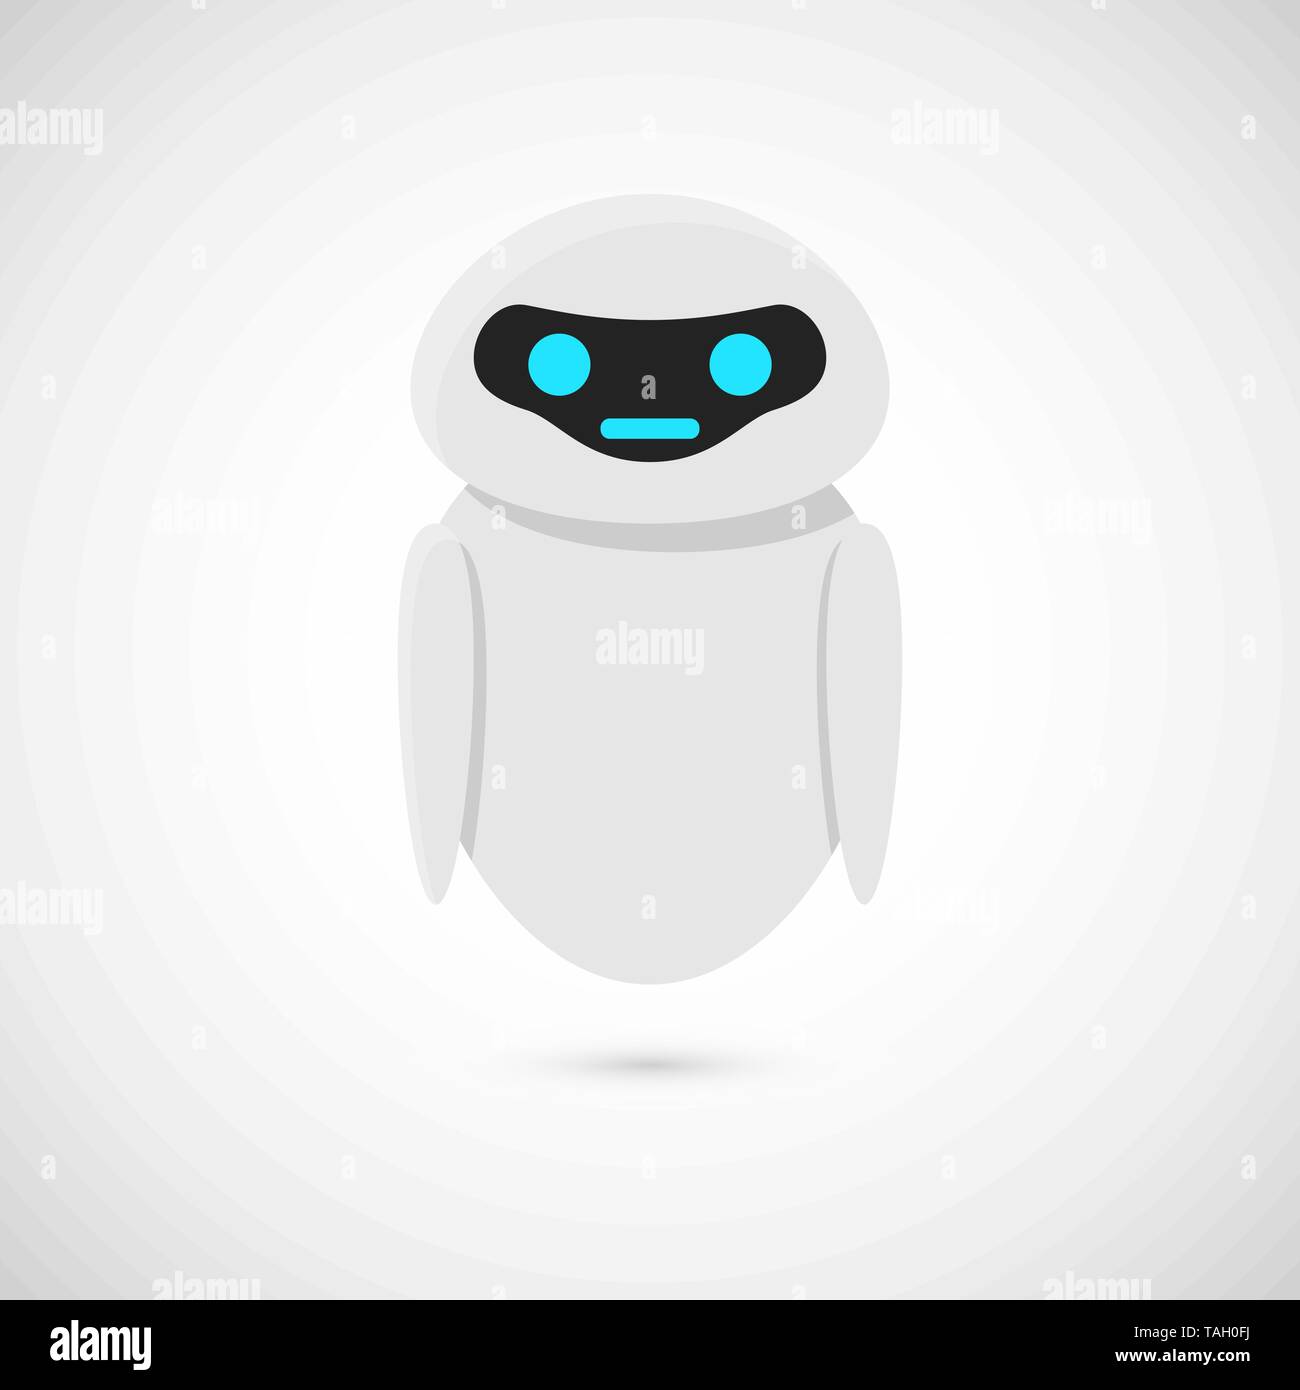 Robot Cartoon carattere. Chat bot. Illustrazione Vettoriale Illustrazione Vettoriale